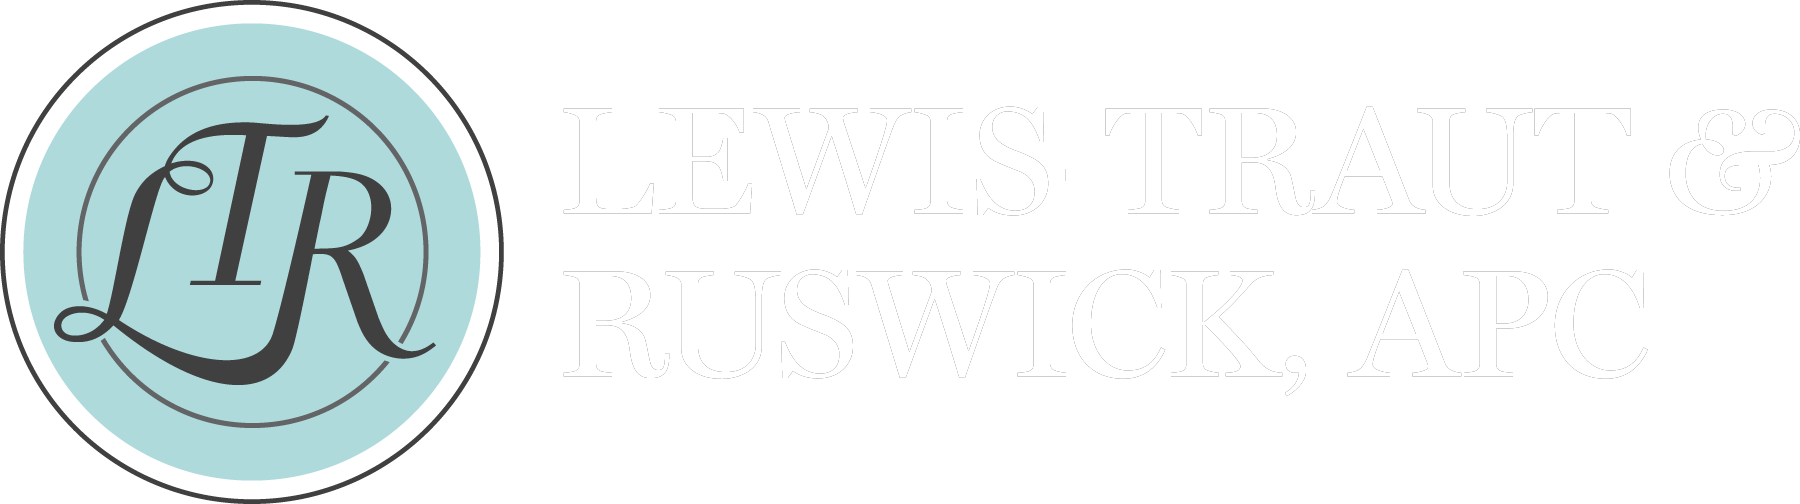 Lewis-Traut Ruswick, APC